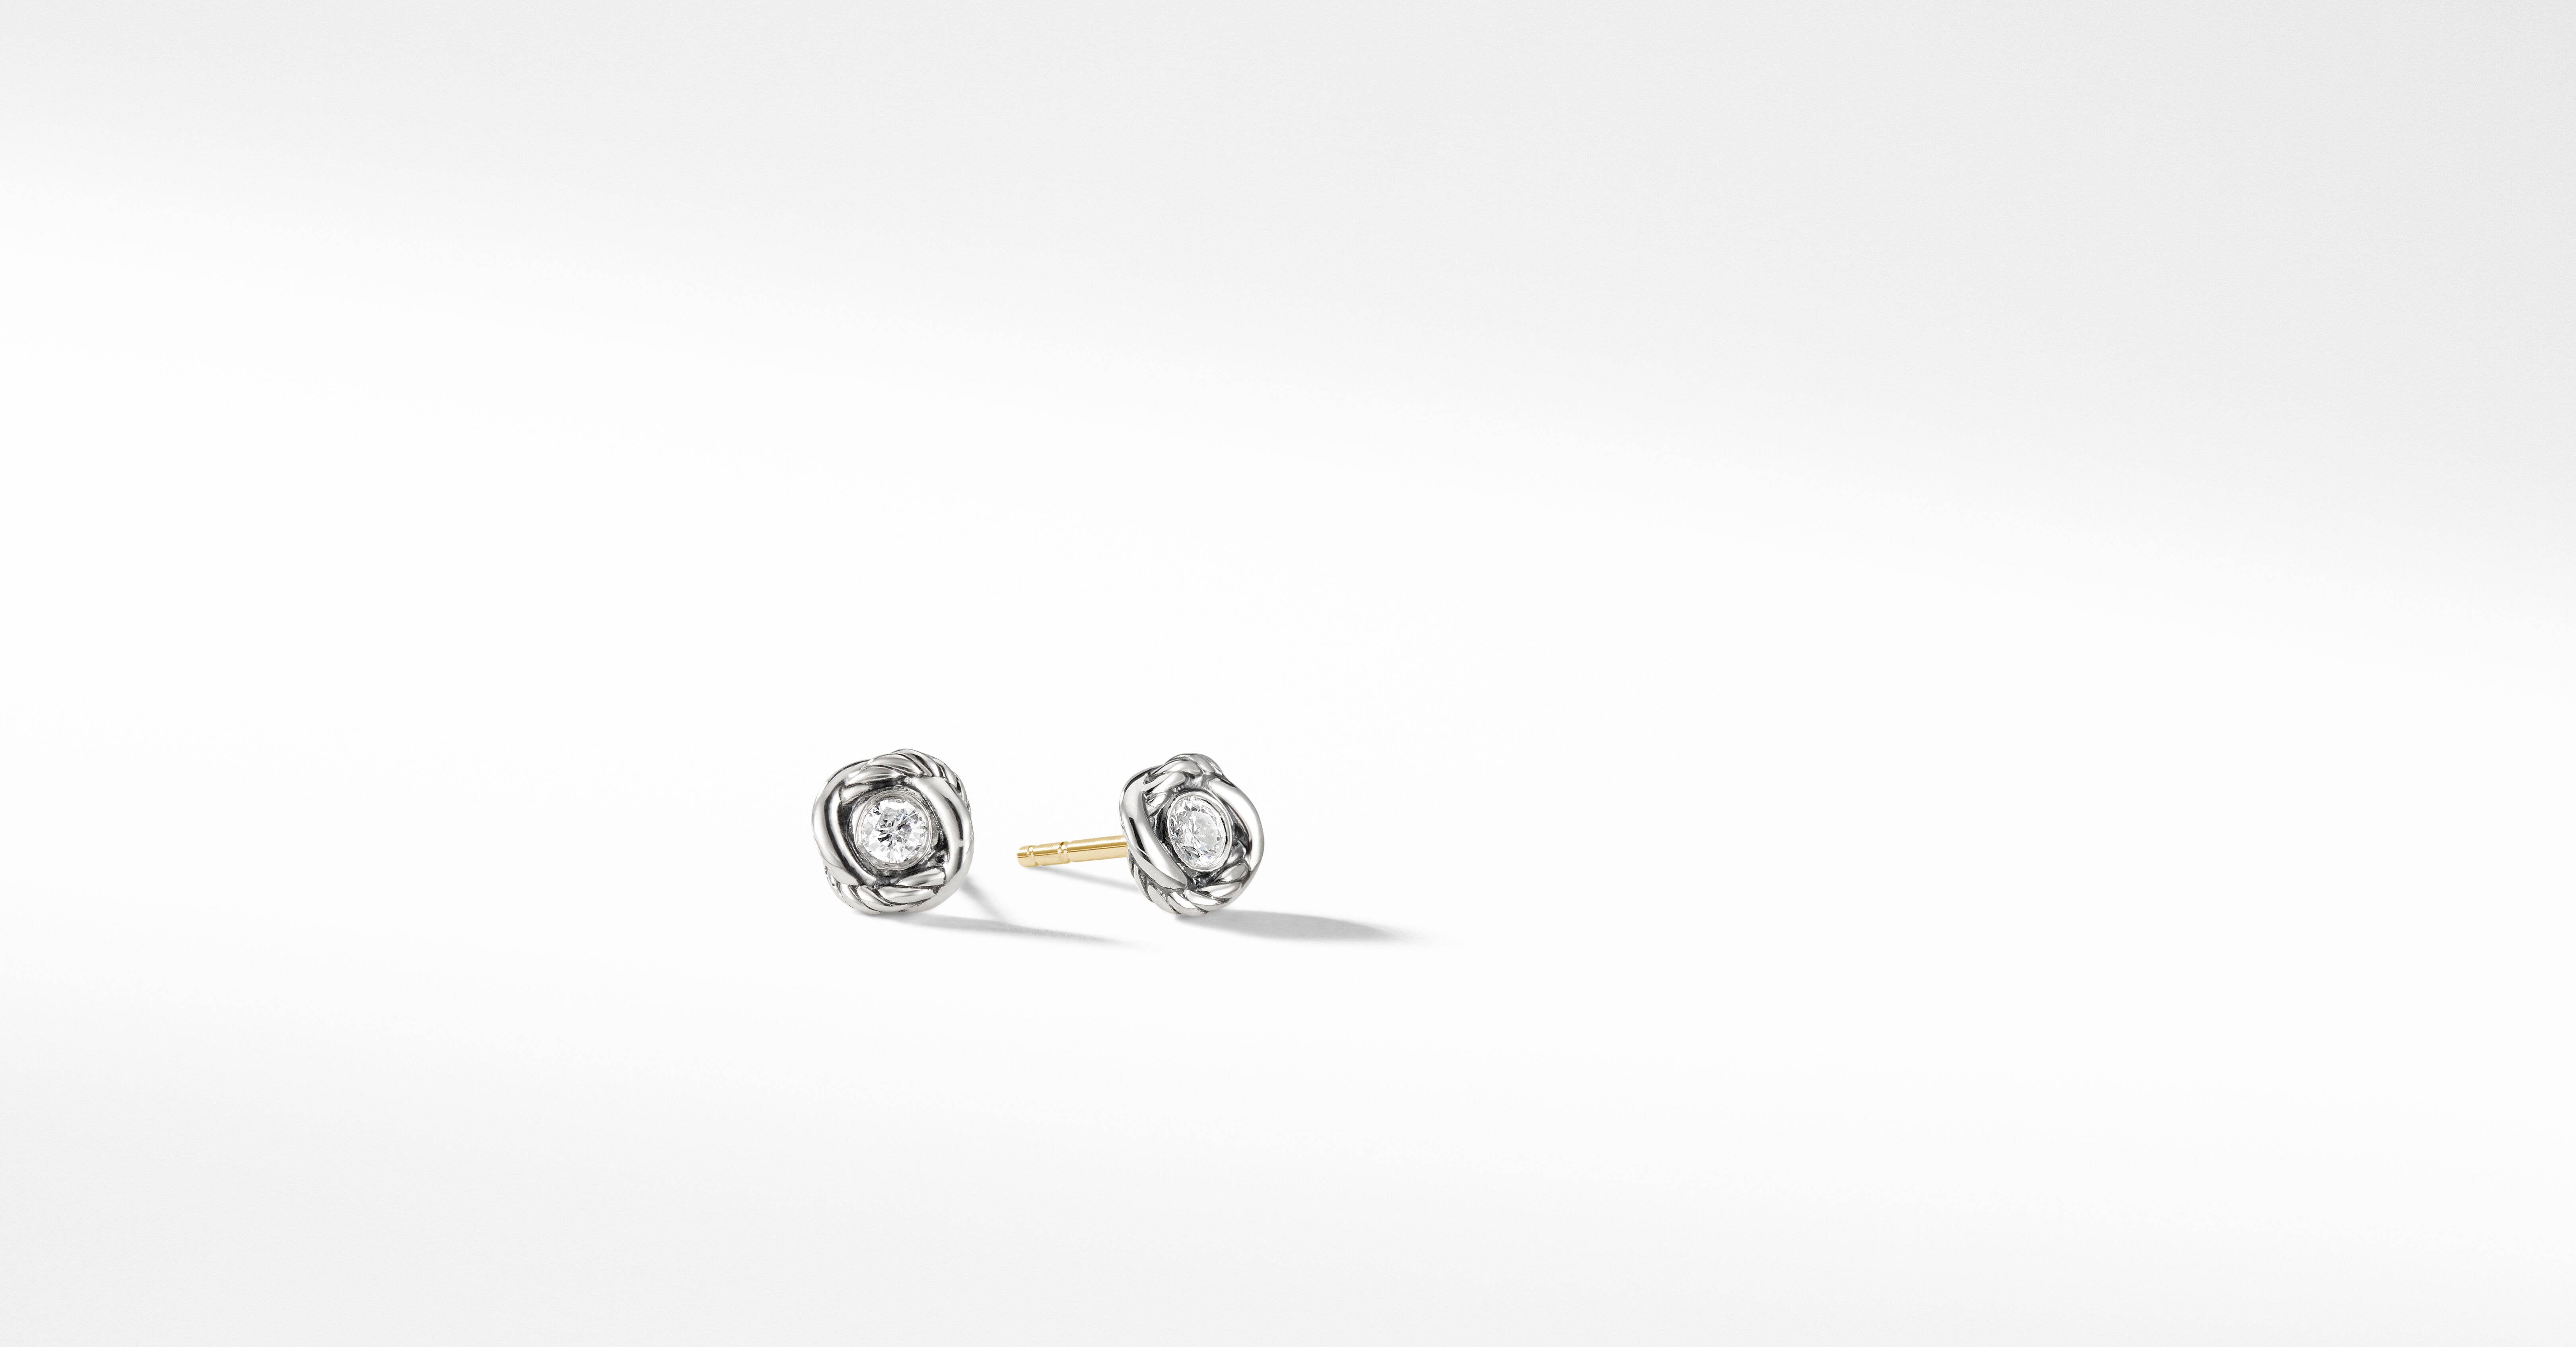 Aggregate more than 64 david yurman infinity earrings latest ...